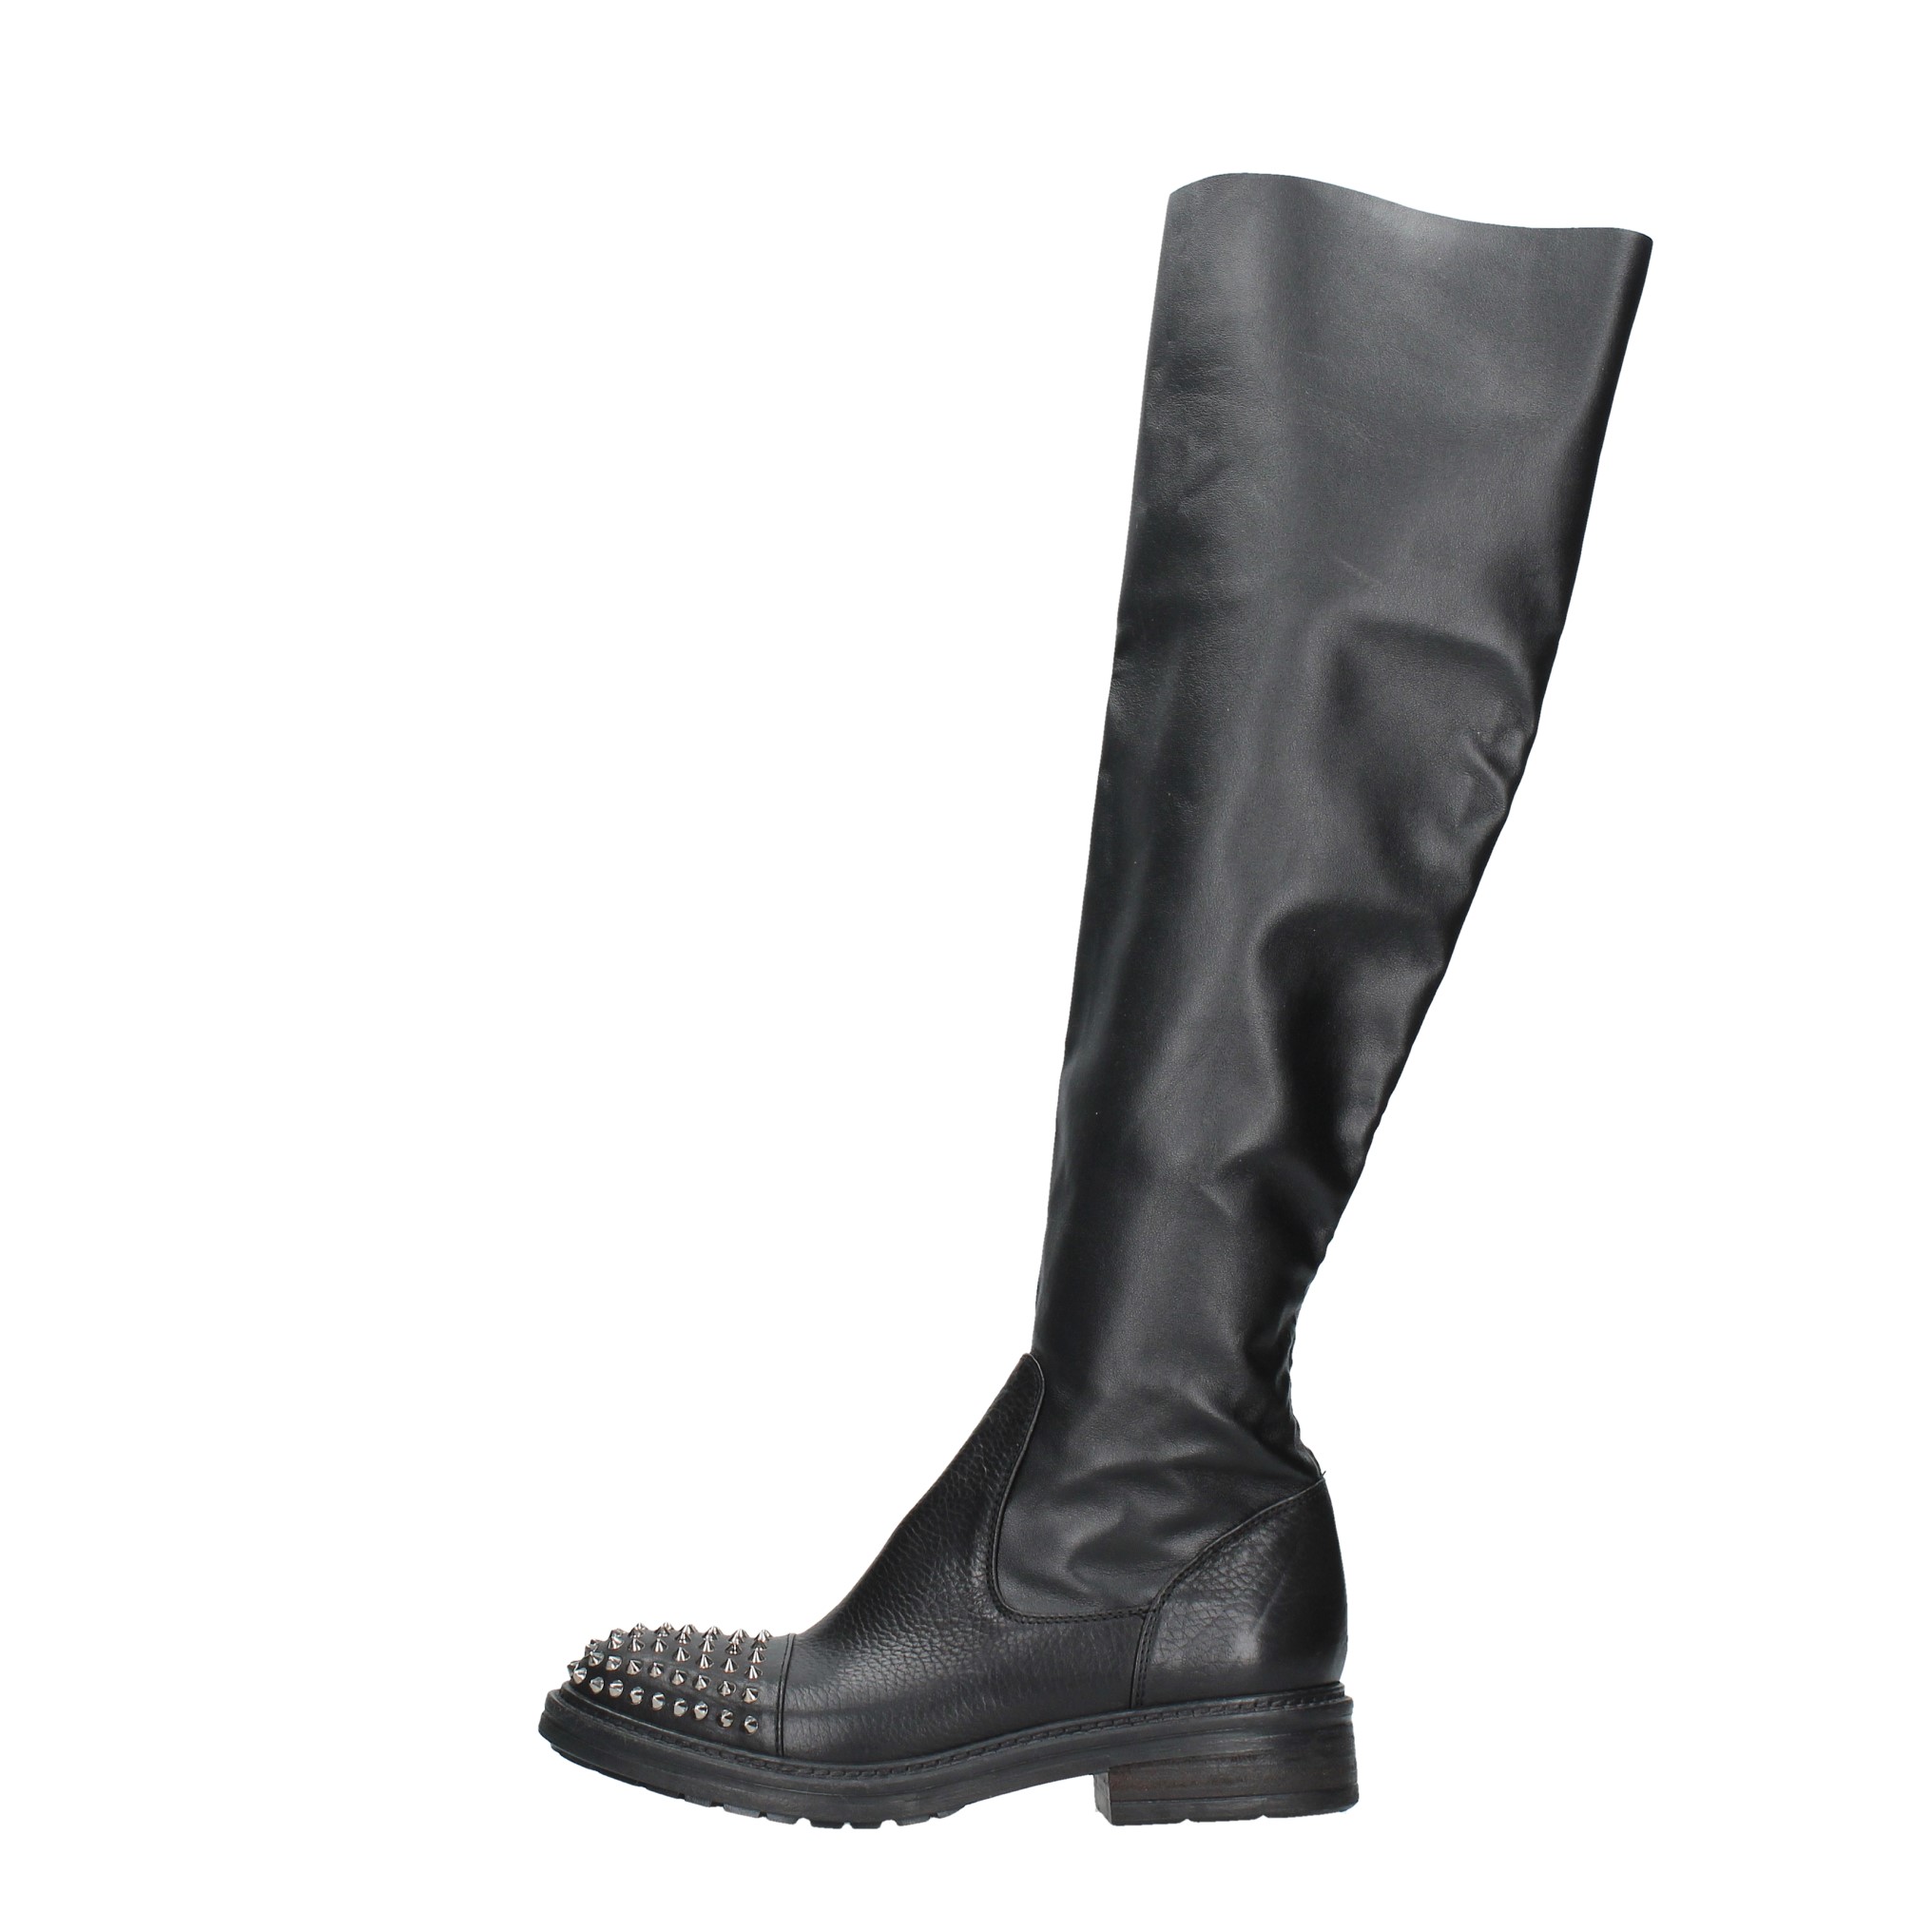 Boots Black - FRU.IT - Ginevra calzature